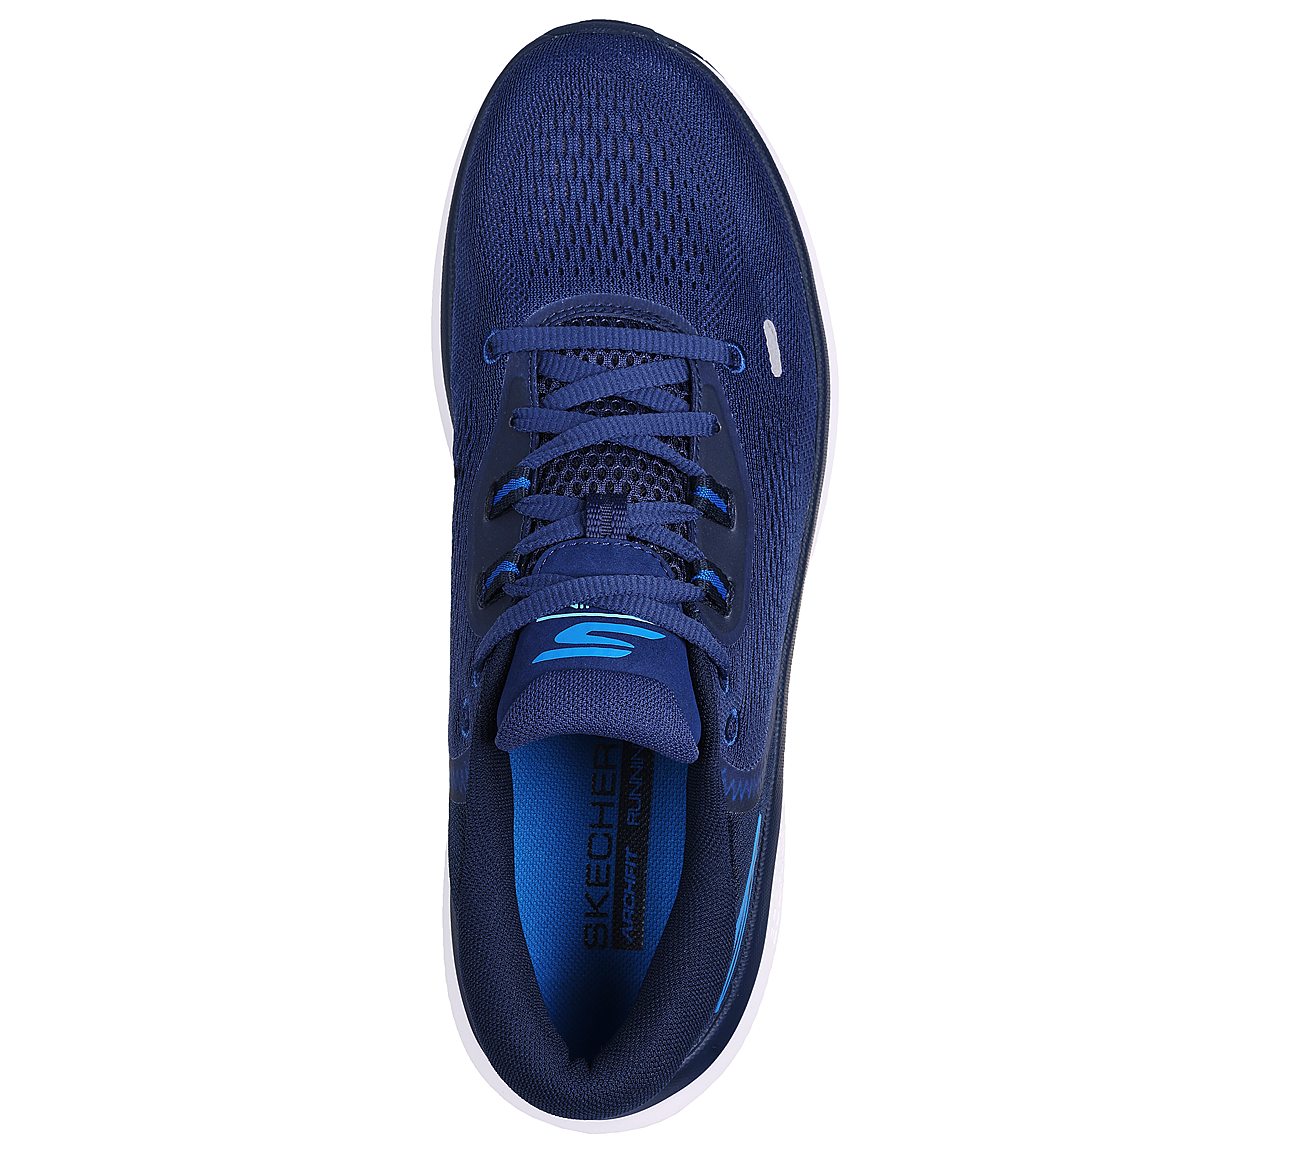 GO RUN PURE 4, NAVY/BLUE Footwear Top View